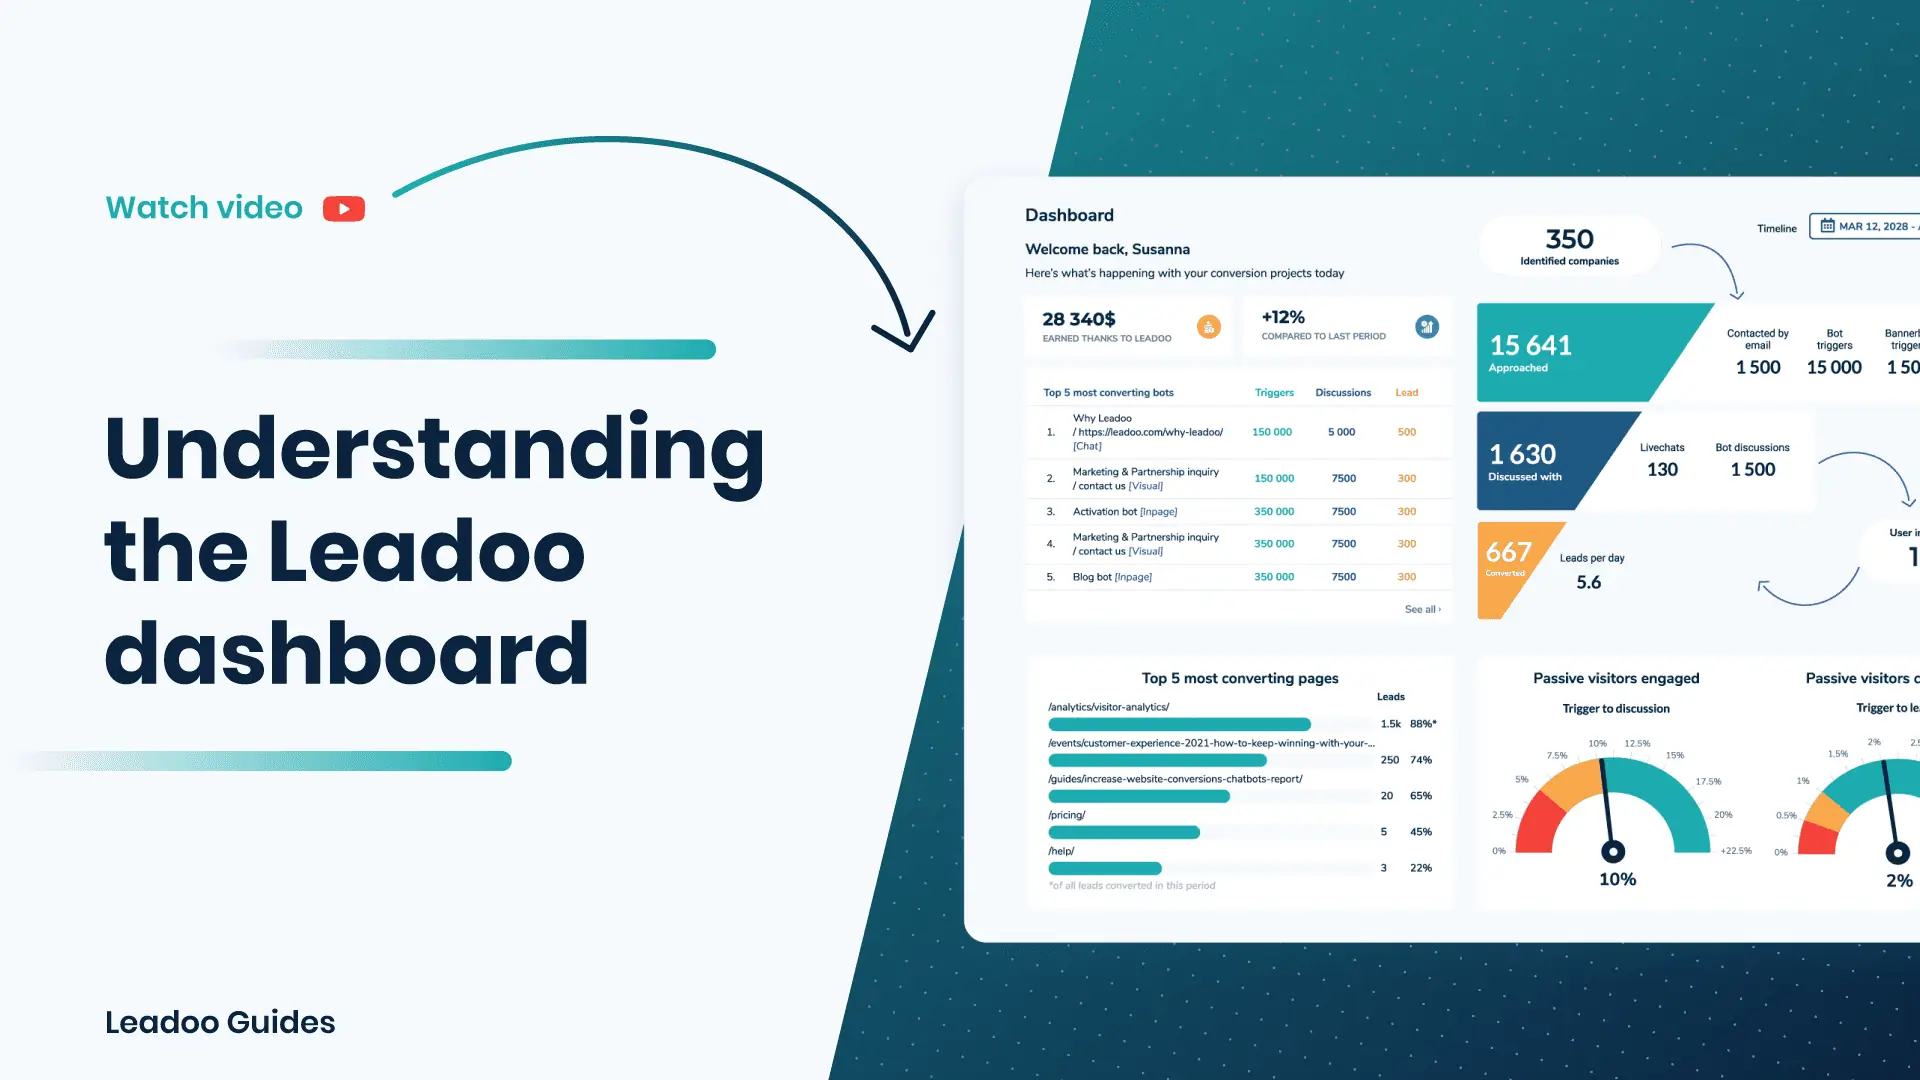 Understanding the Leadoo dashboard vid how to use leadoo dashboard Understanding the Leadoo dashboard